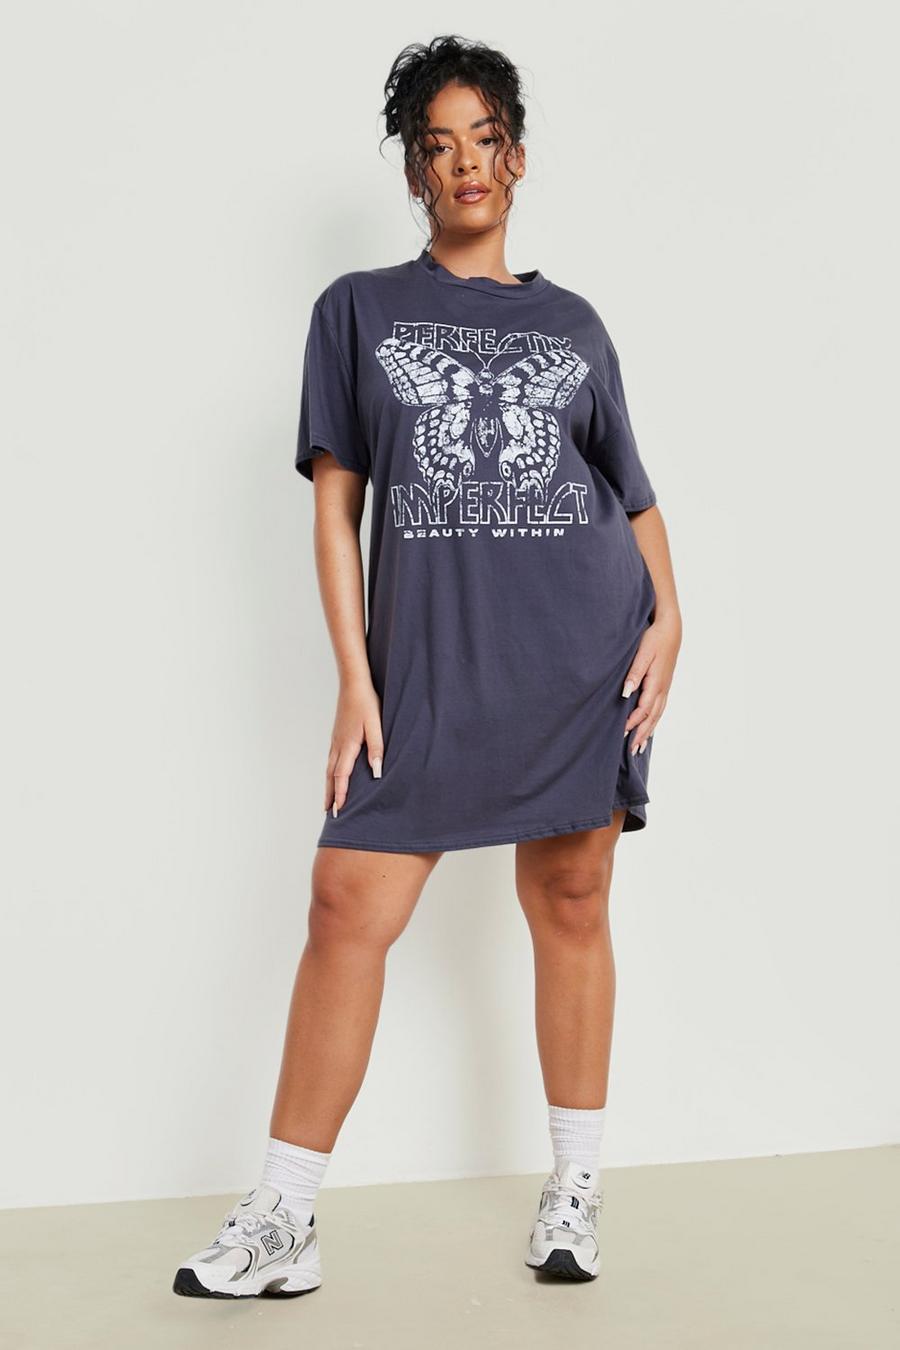 Charcoal grau Plus Perfectly Imperfect Slogan T-shirt Dress